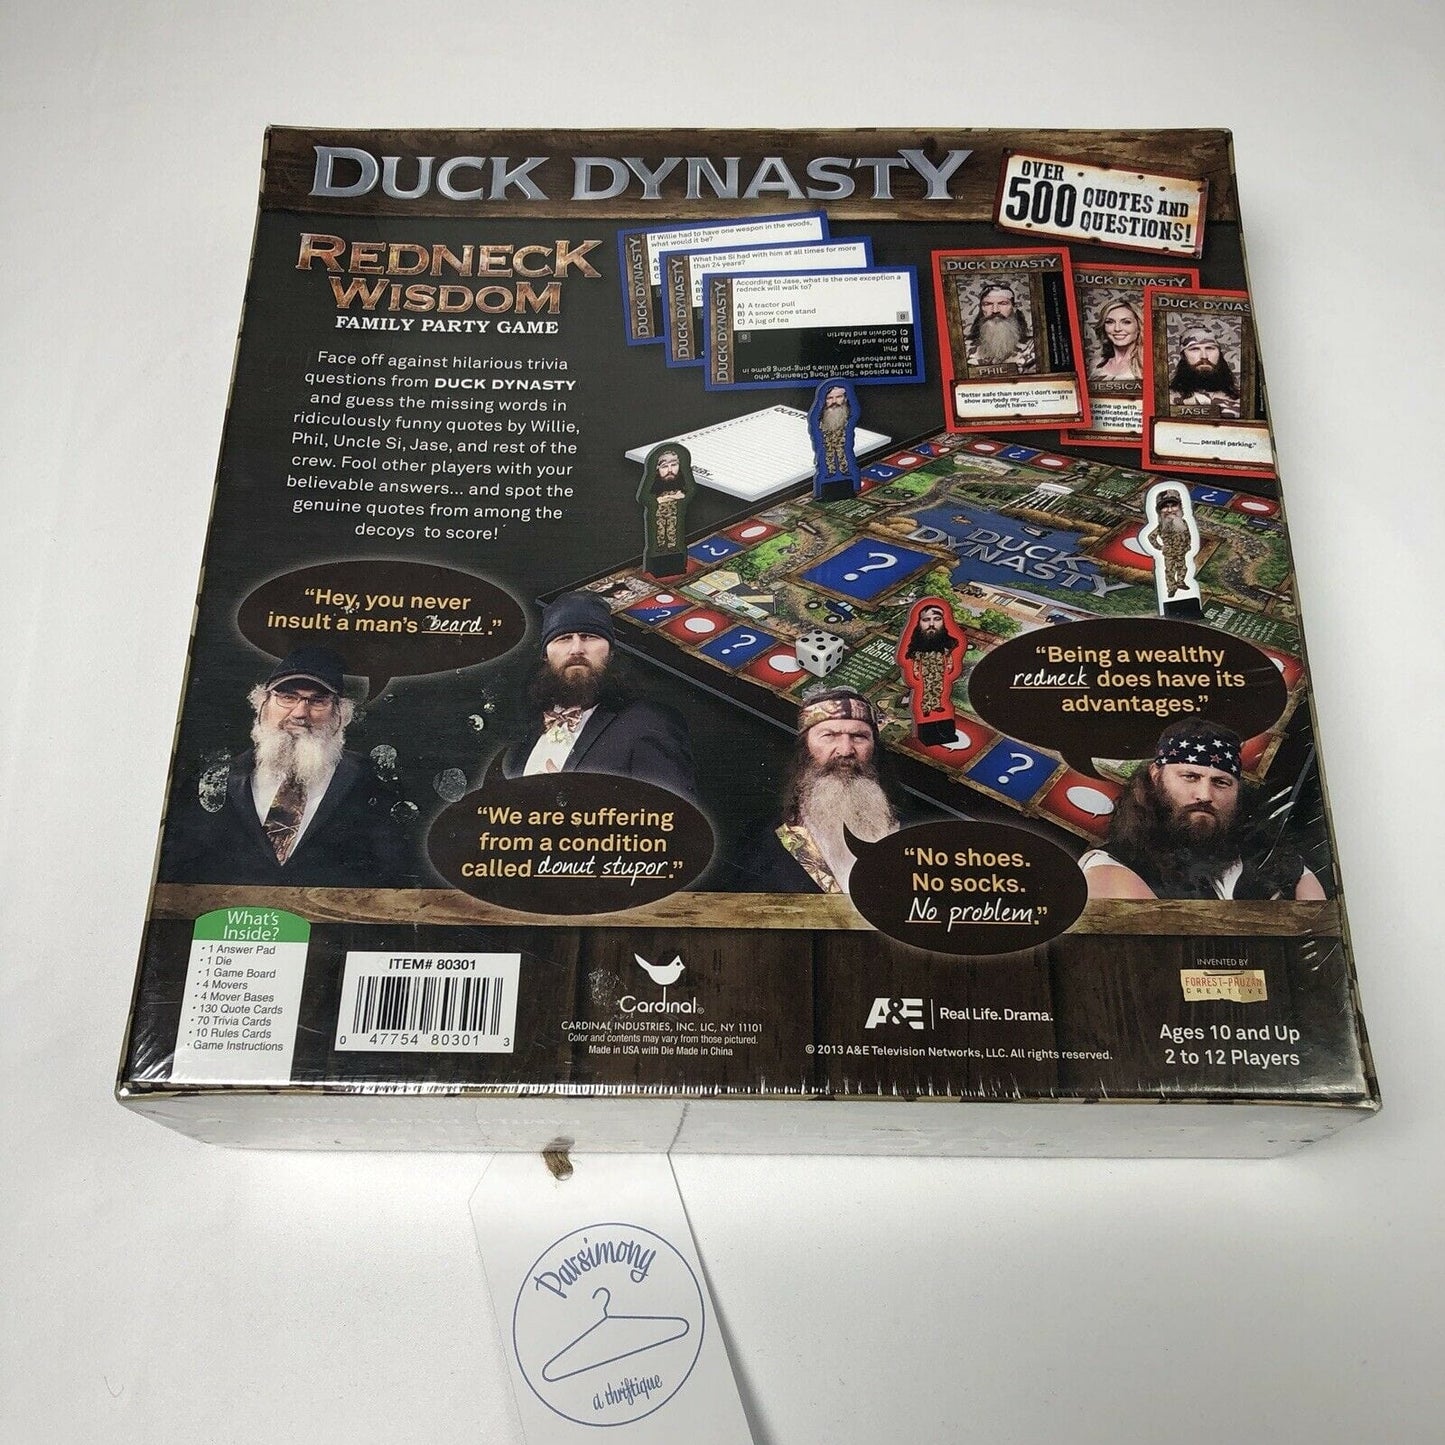 Cardinal Duck Dynasty Redneck Wisdom Family Party Game Made In USA NIB